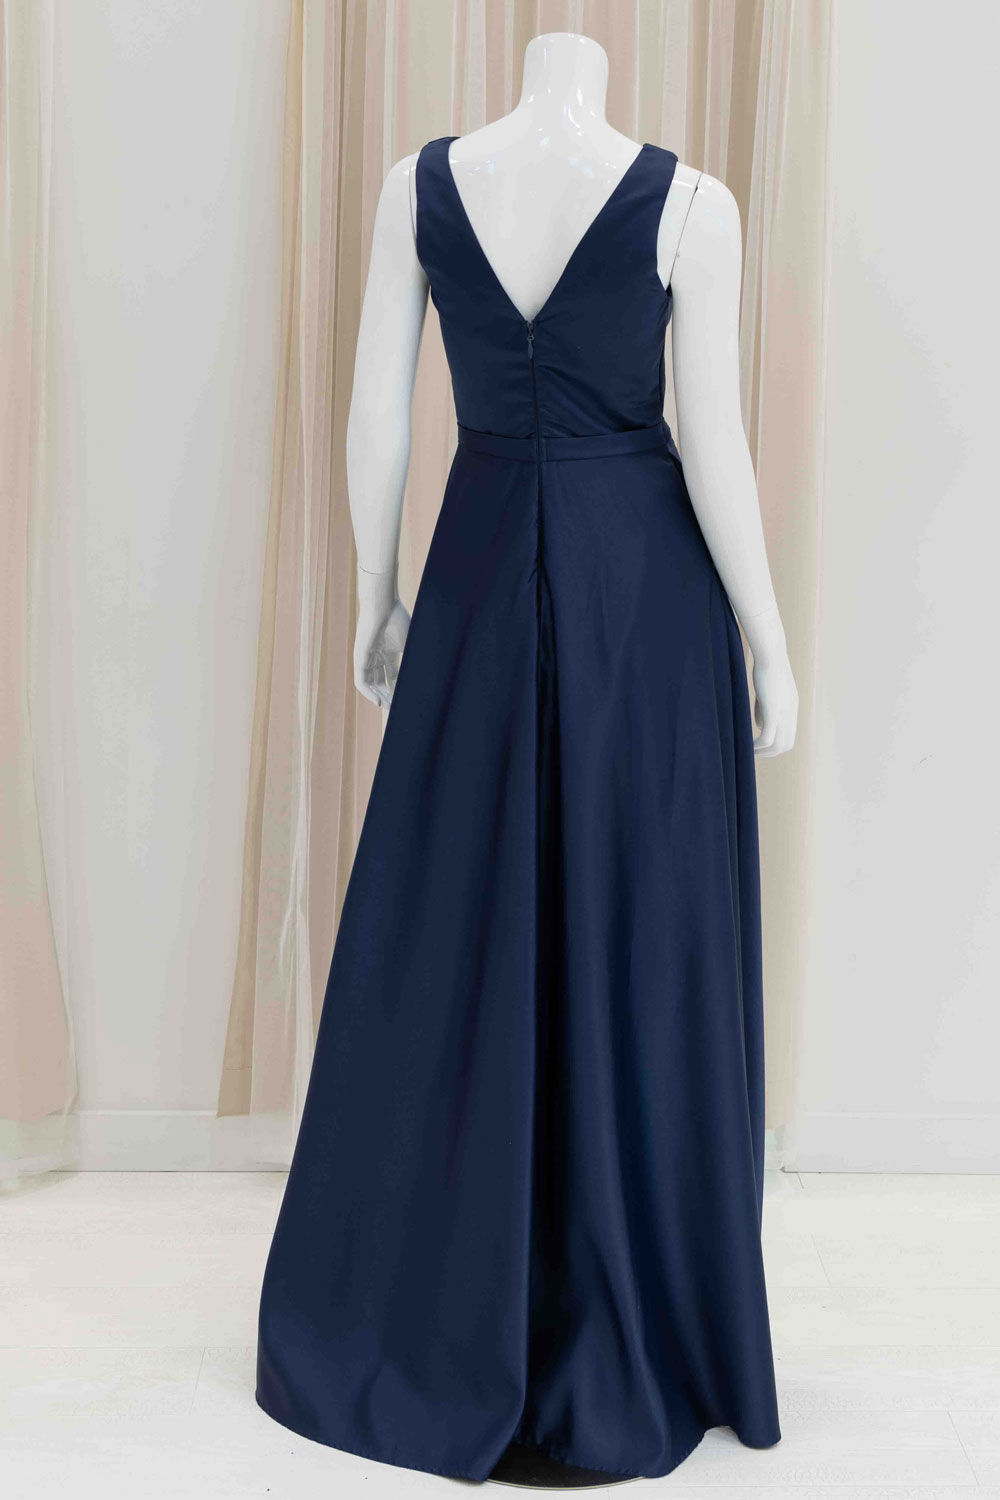 Simple Satin Elegant A-Line Evening Dress in Navy Blue